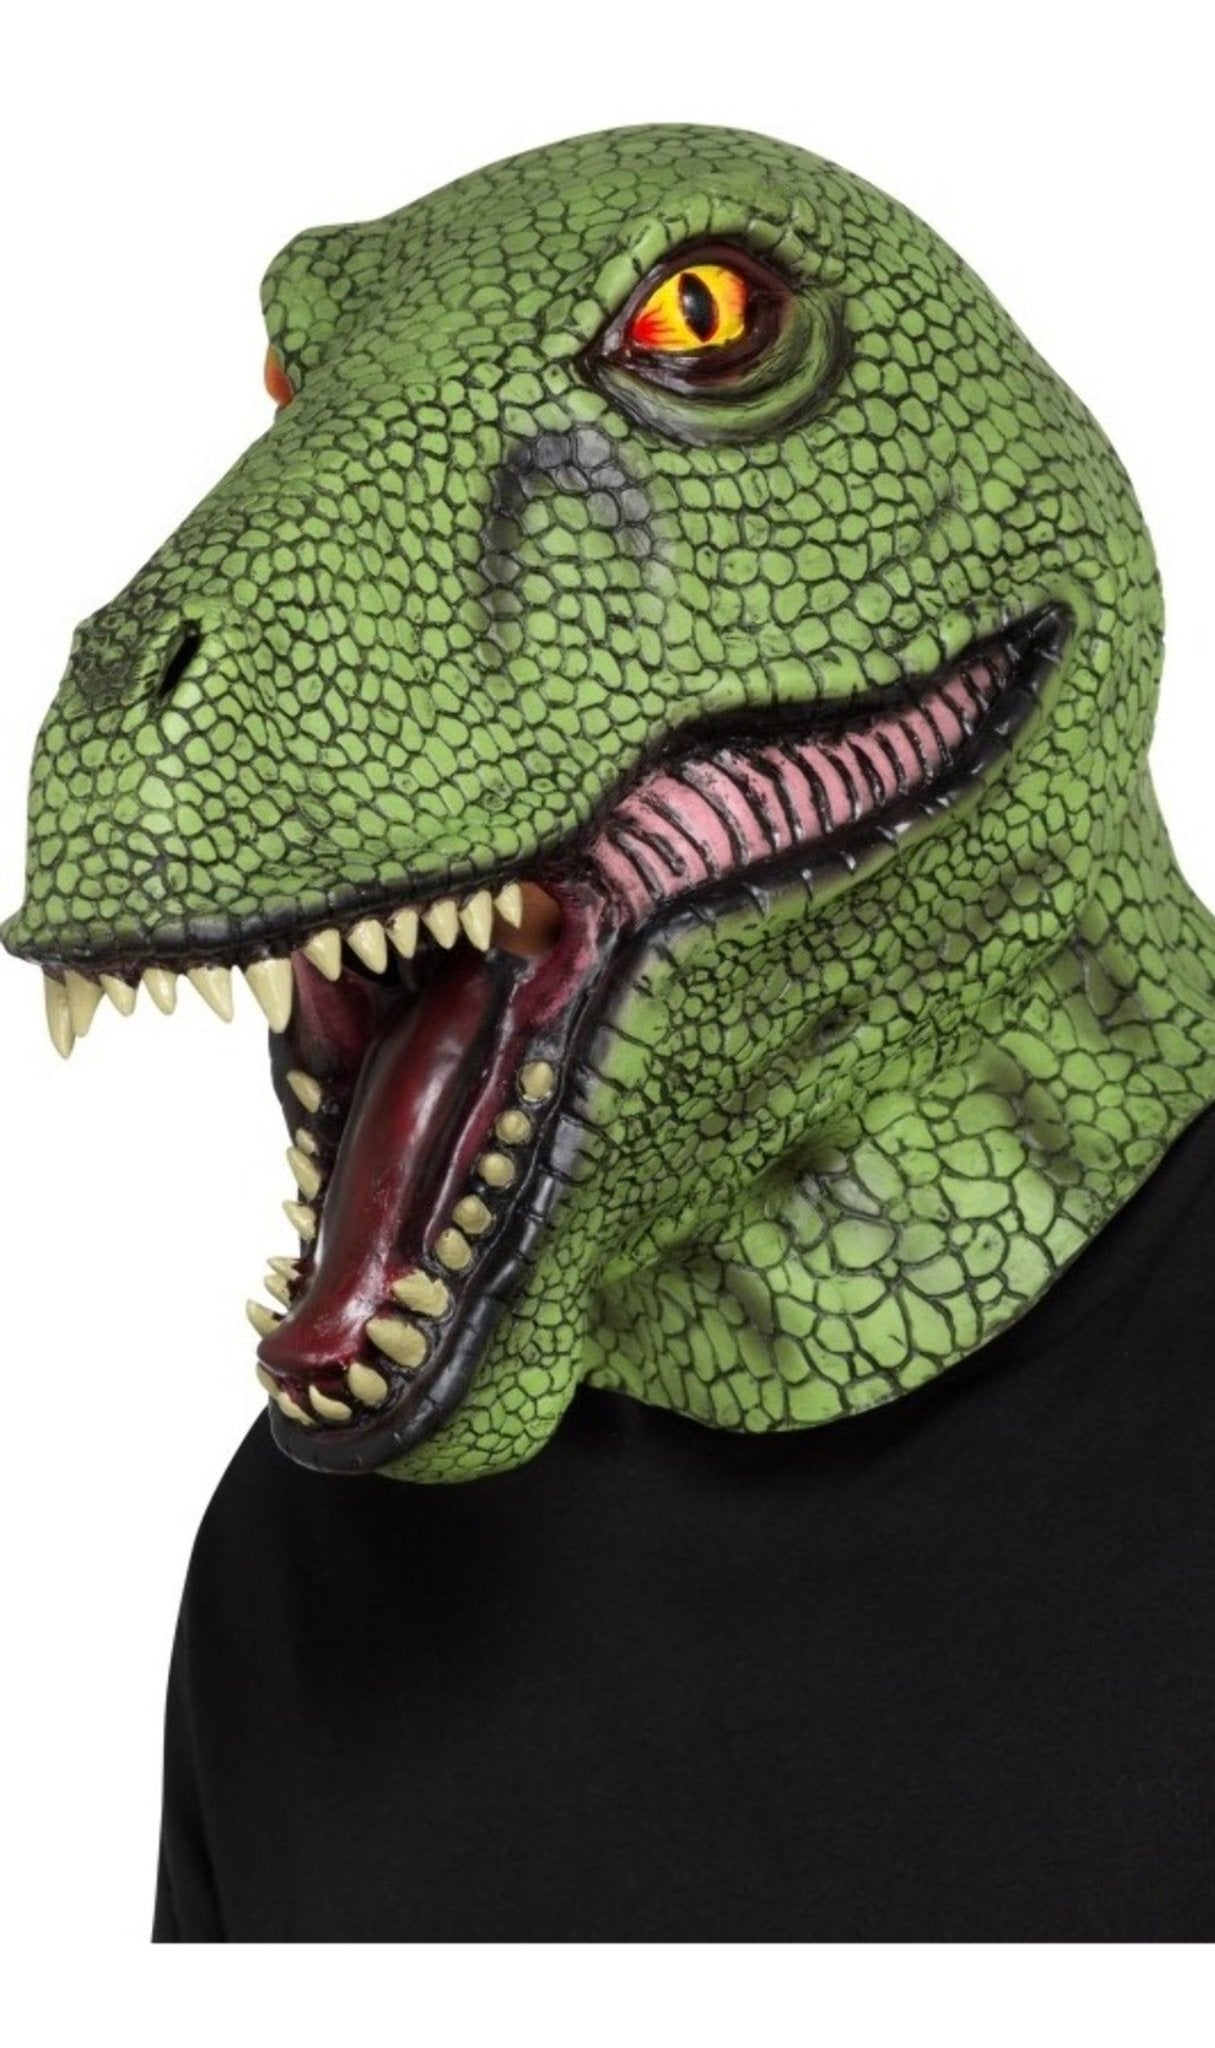 Dinosuarier Maske aus Latex